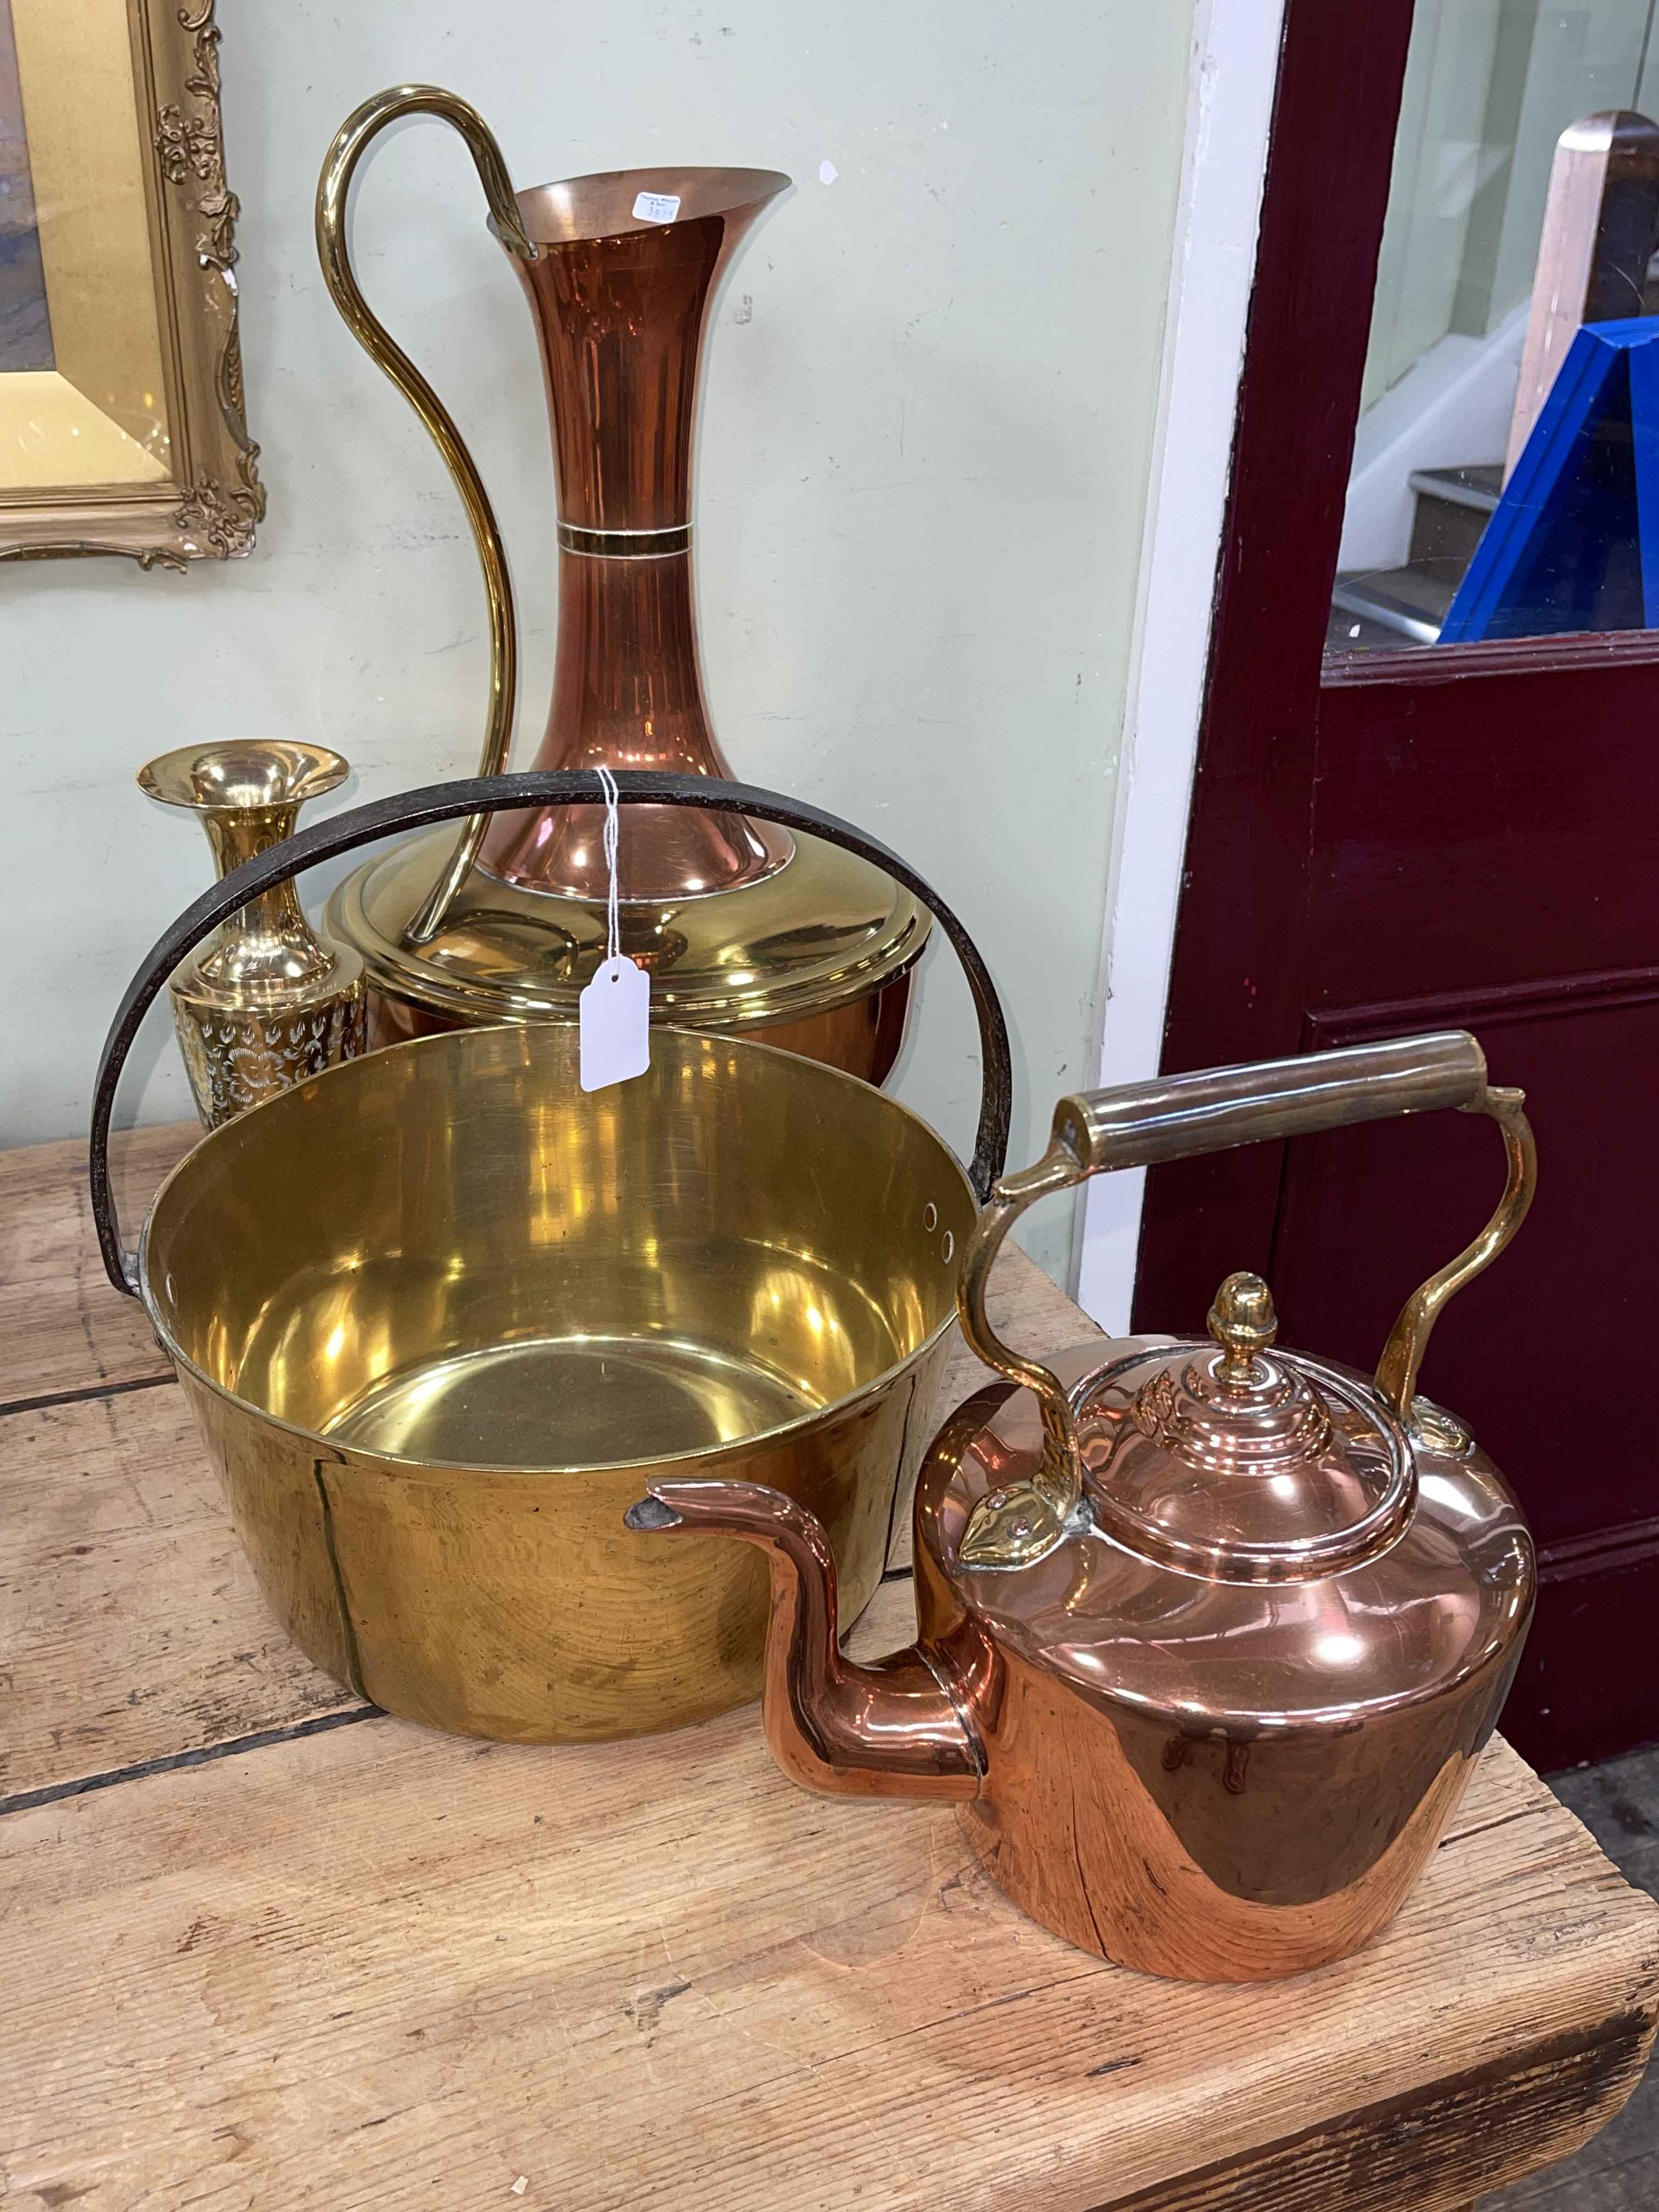 Brass and copper handled jug and teapot, brass jam pan, etc.